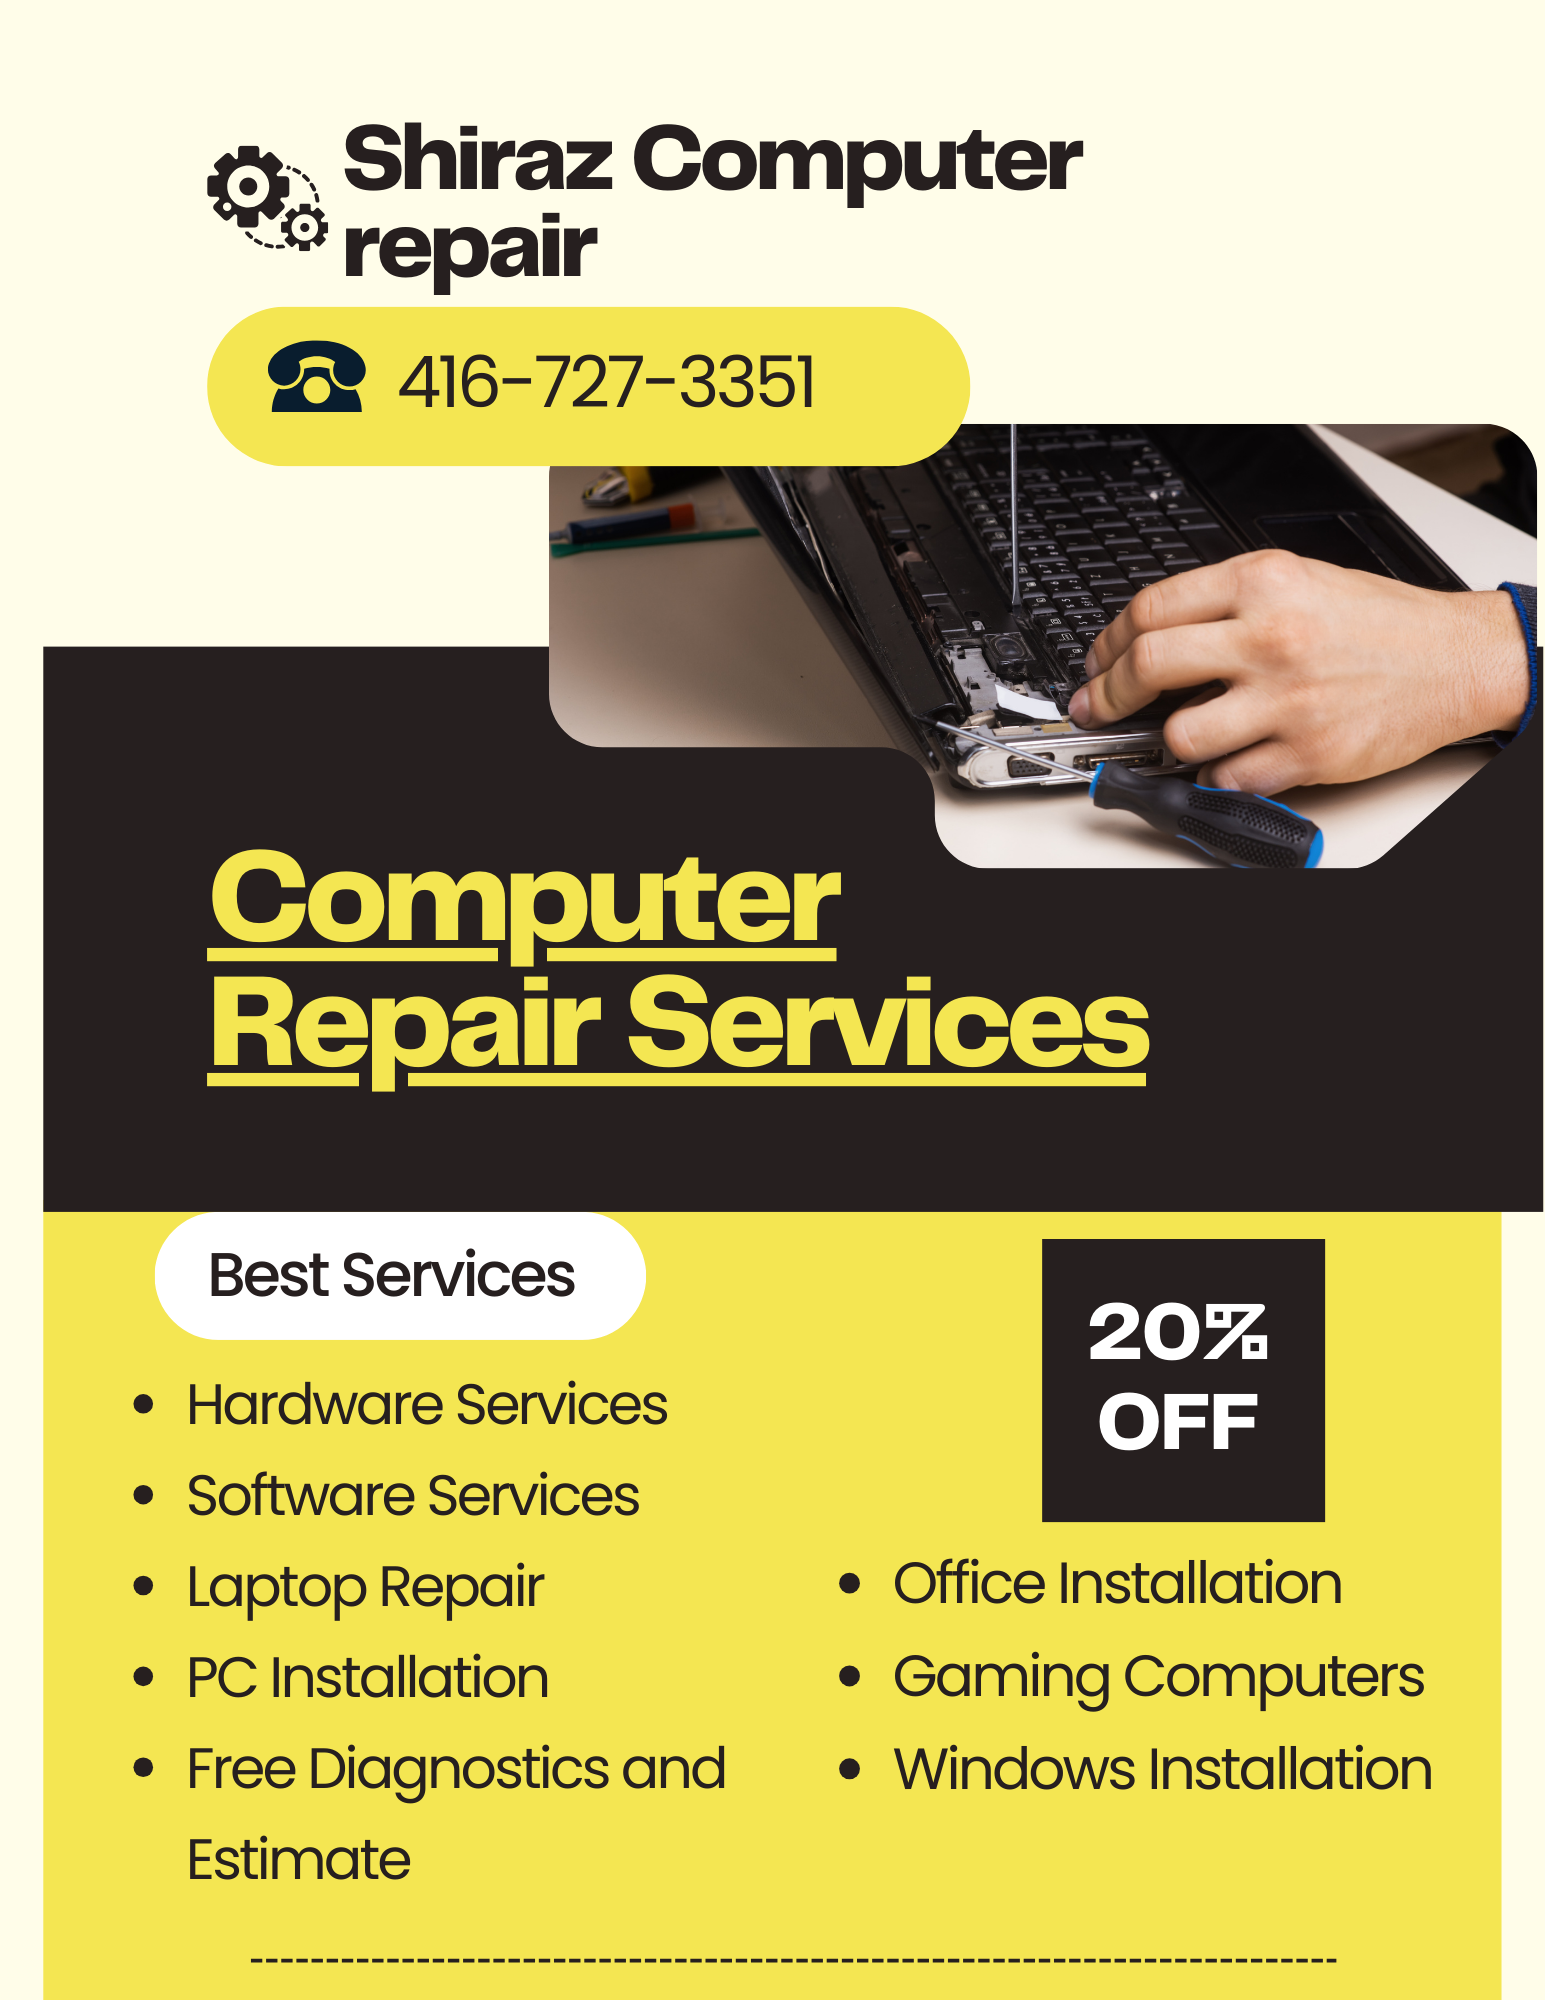 Shiraz Computer Repair and Services